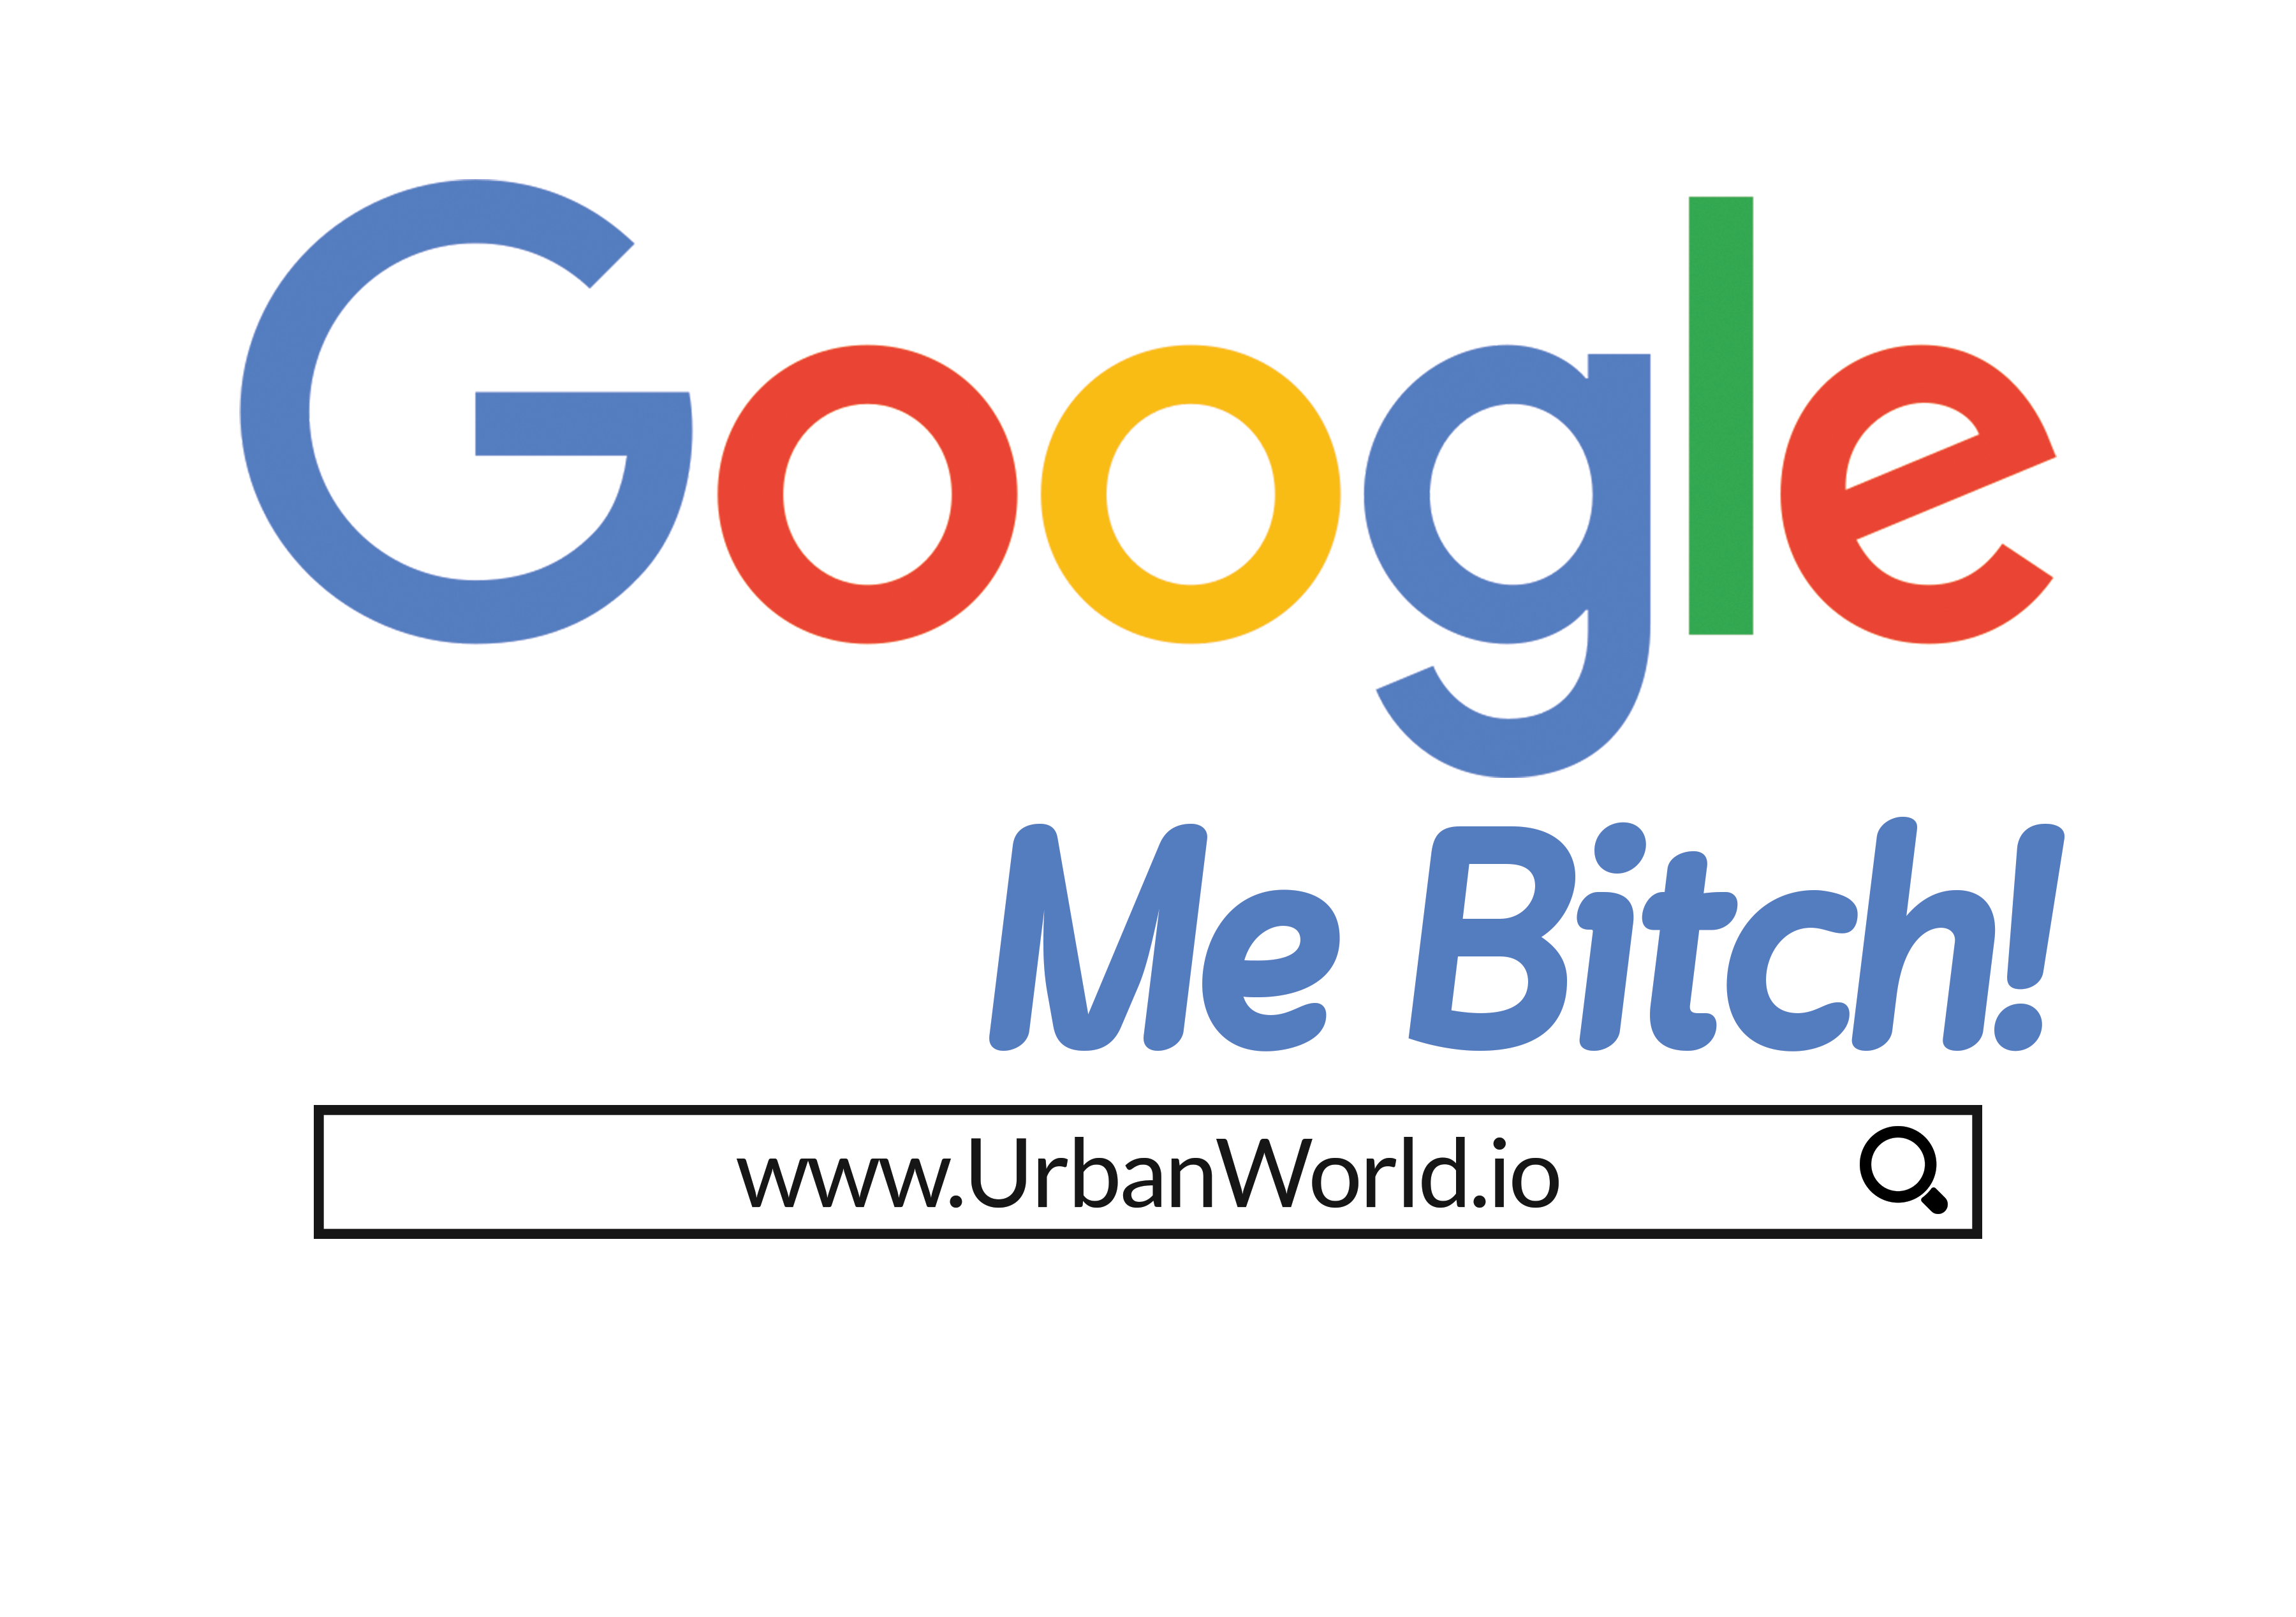 Google Me Bitch!